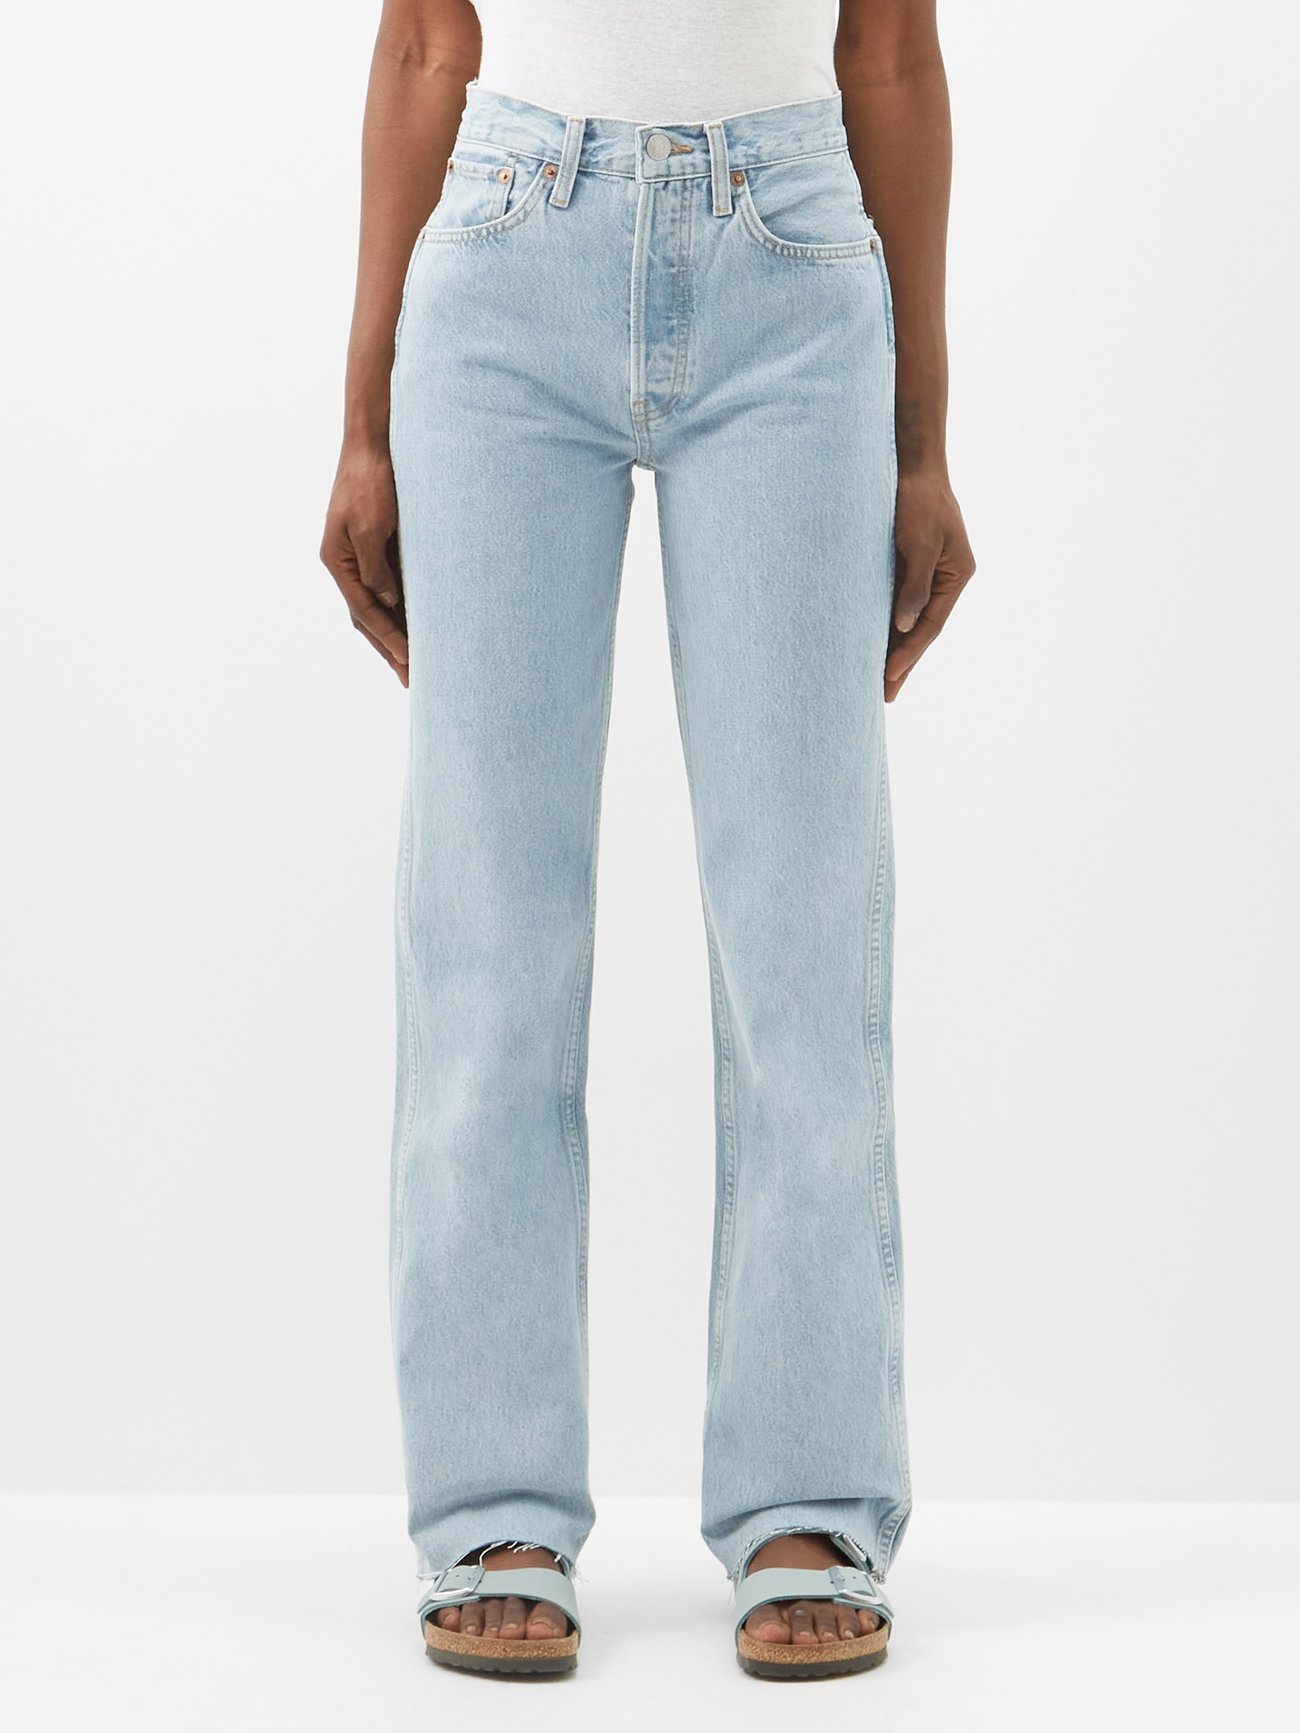 90s high-rise straight-leg jeans